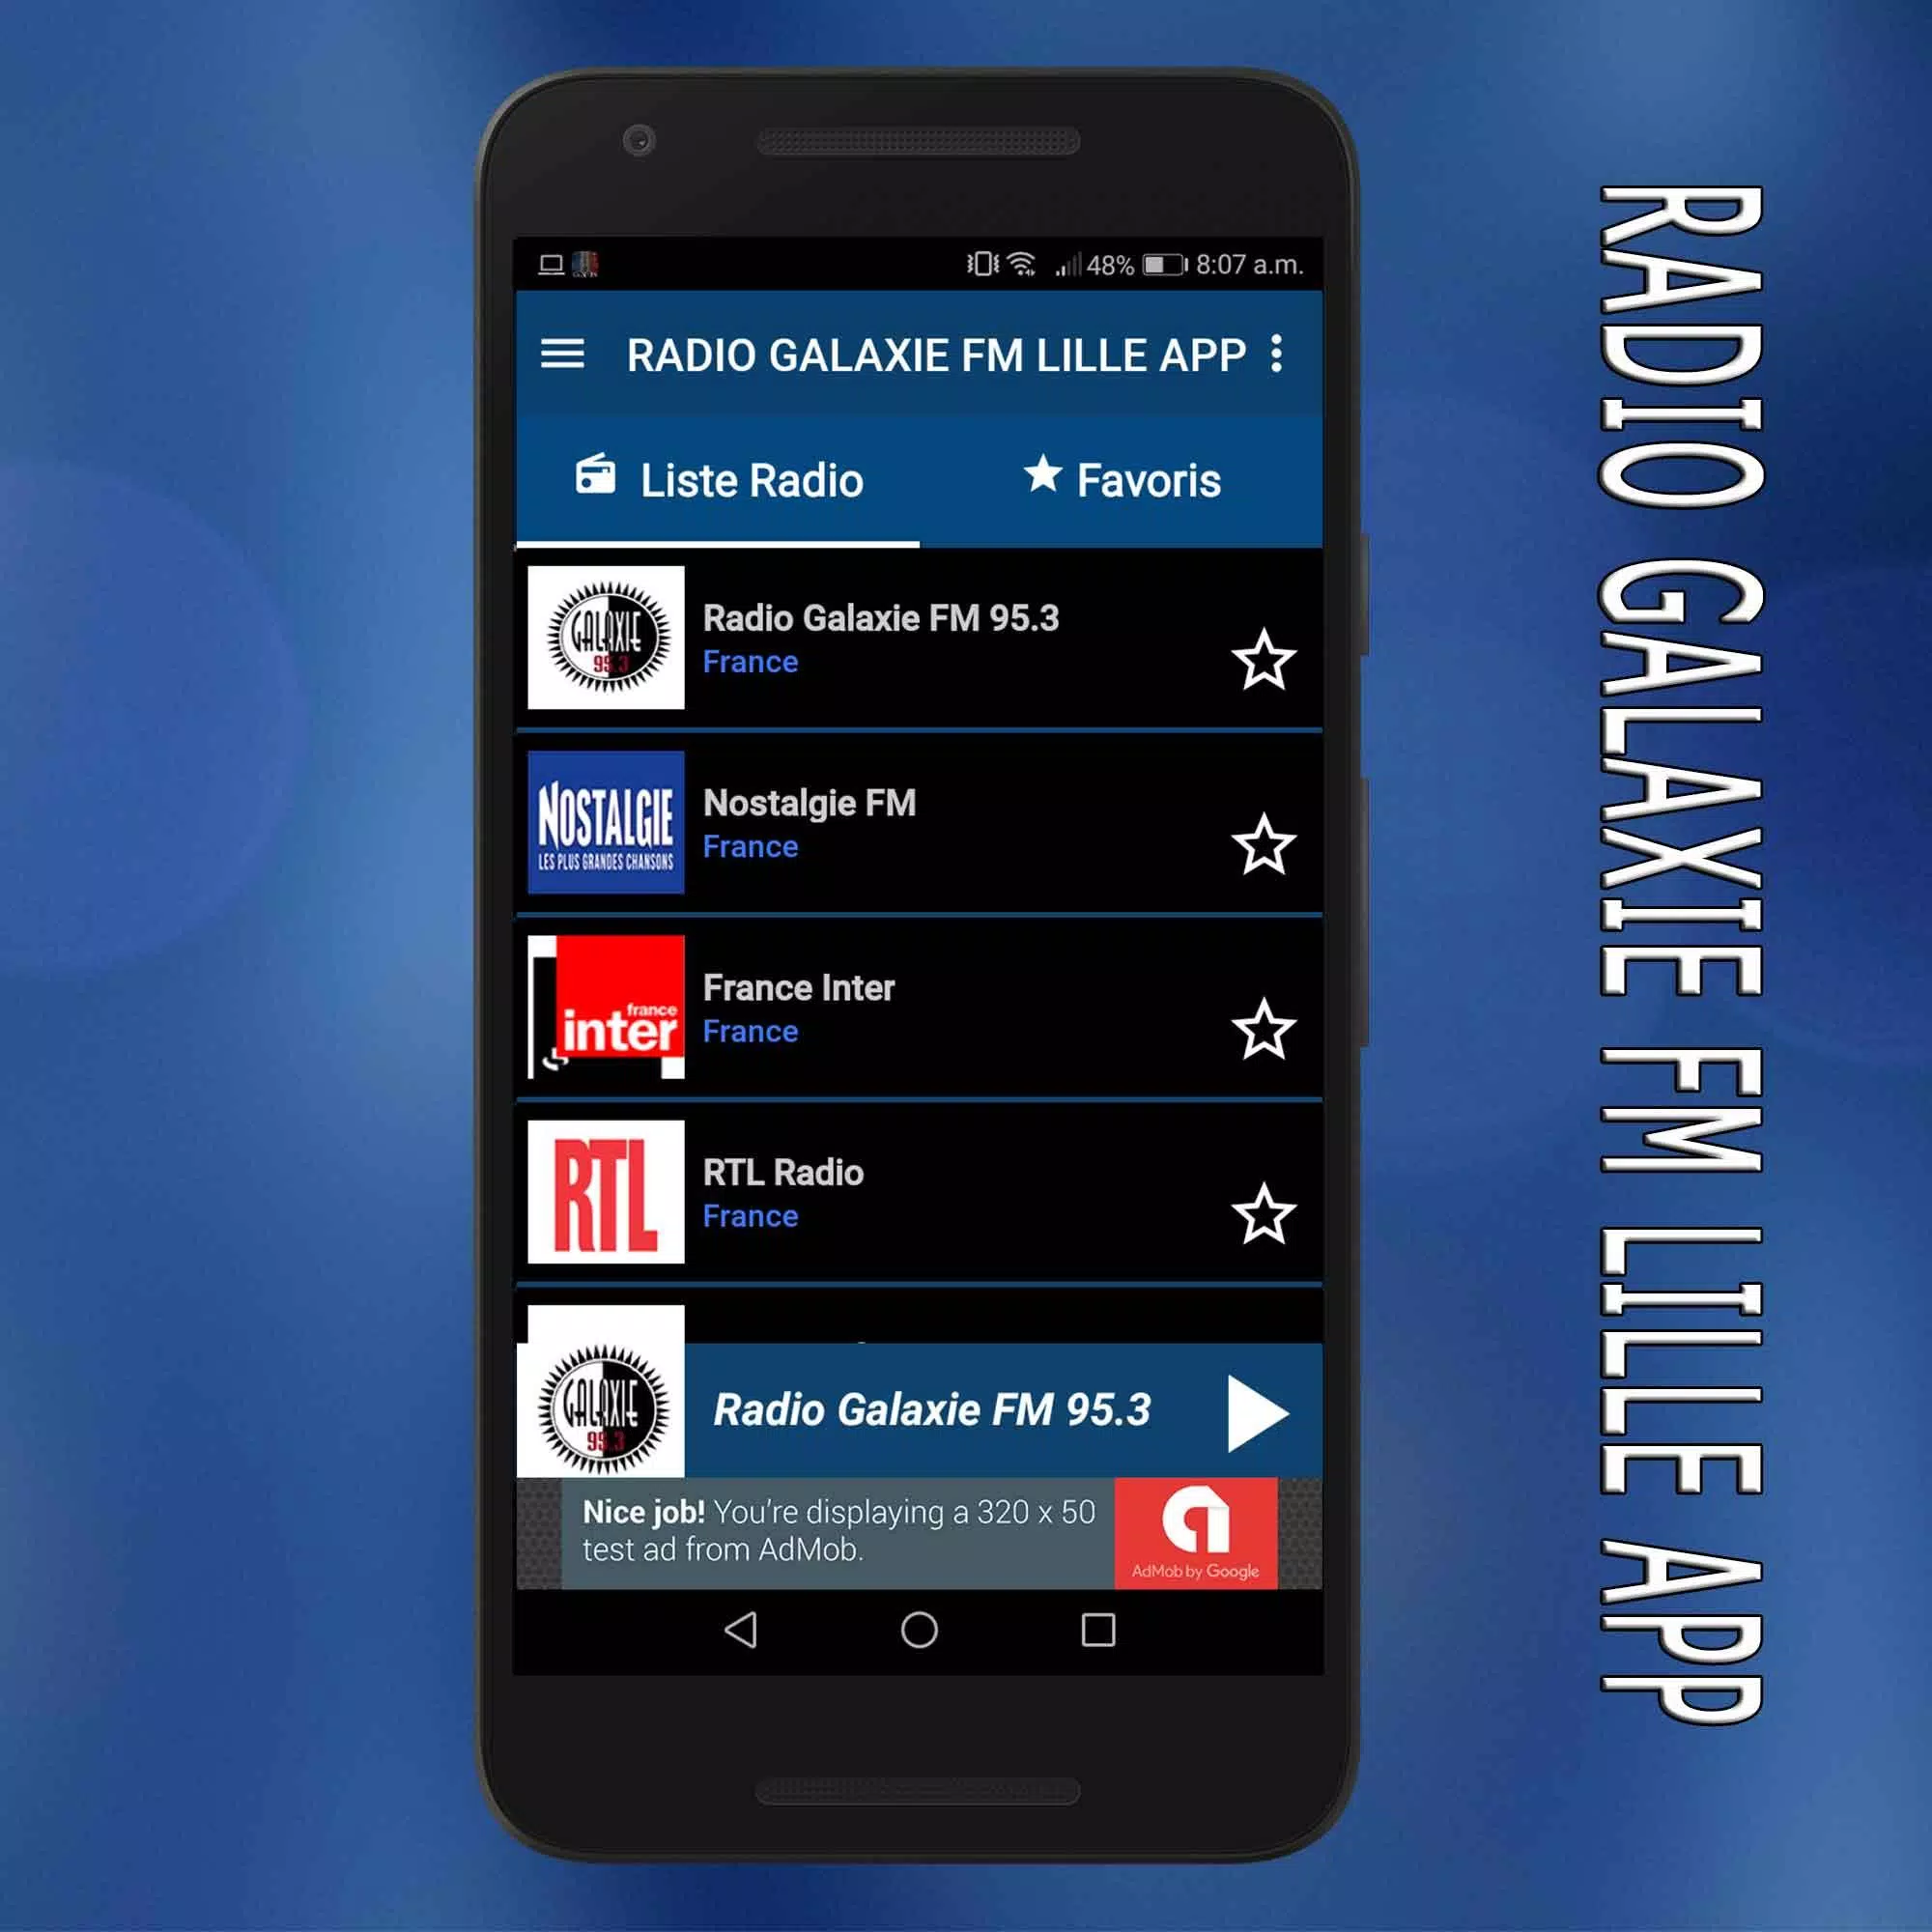 radio galaxie fm:galaxie radio Lille en ligne app APK voor Android Download